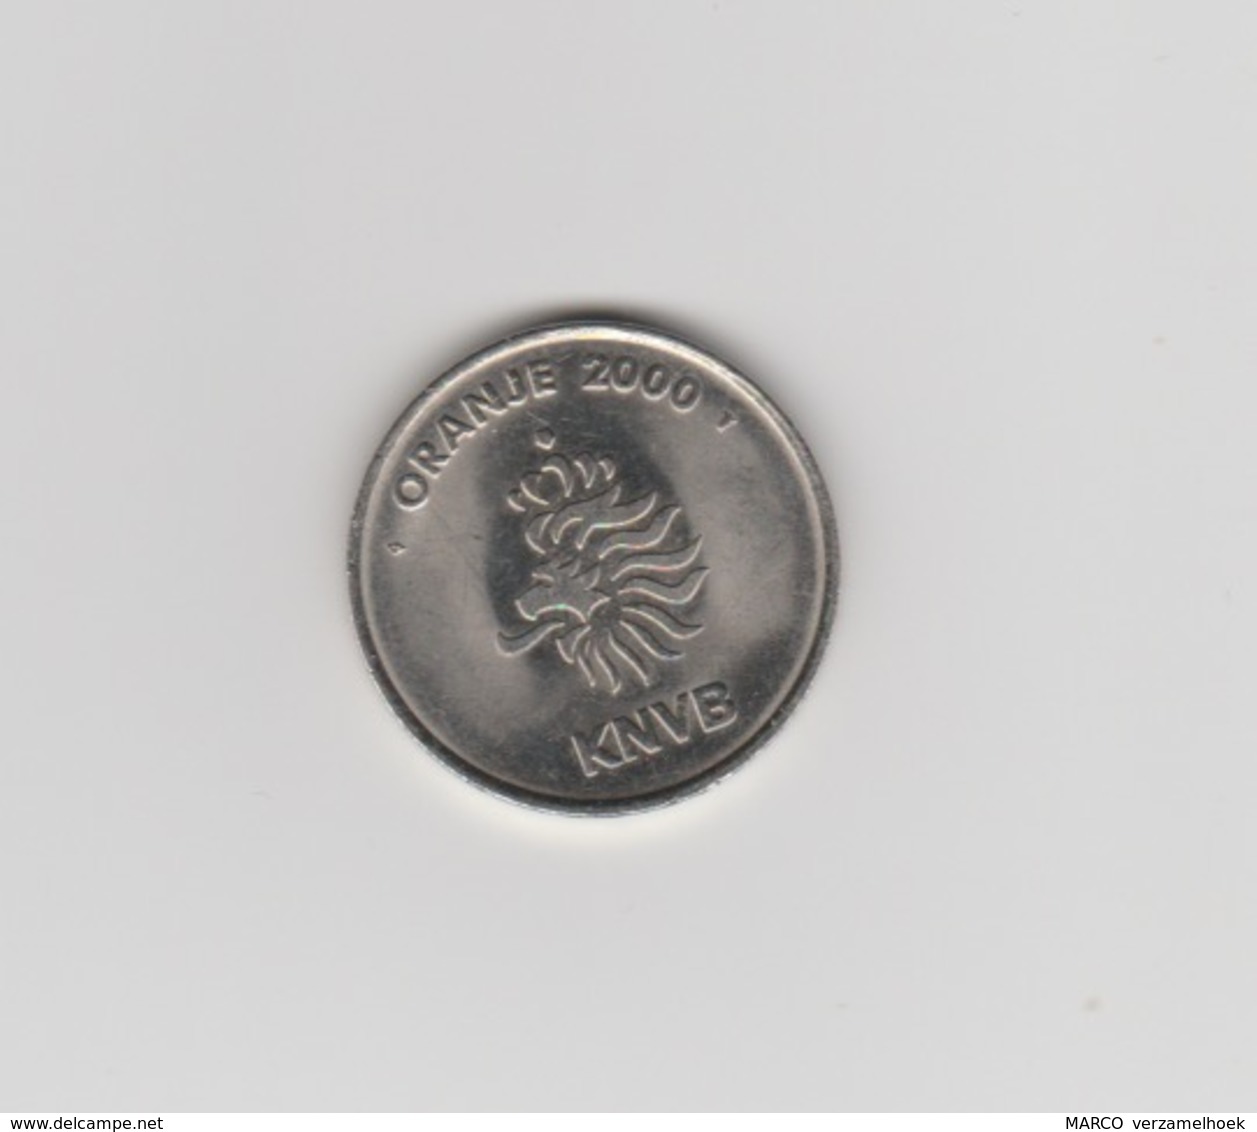 Michael Reiziger Oranje EK2000 KNVB Nederlands Elftal - Monedas Elongadas (elongated Coins)